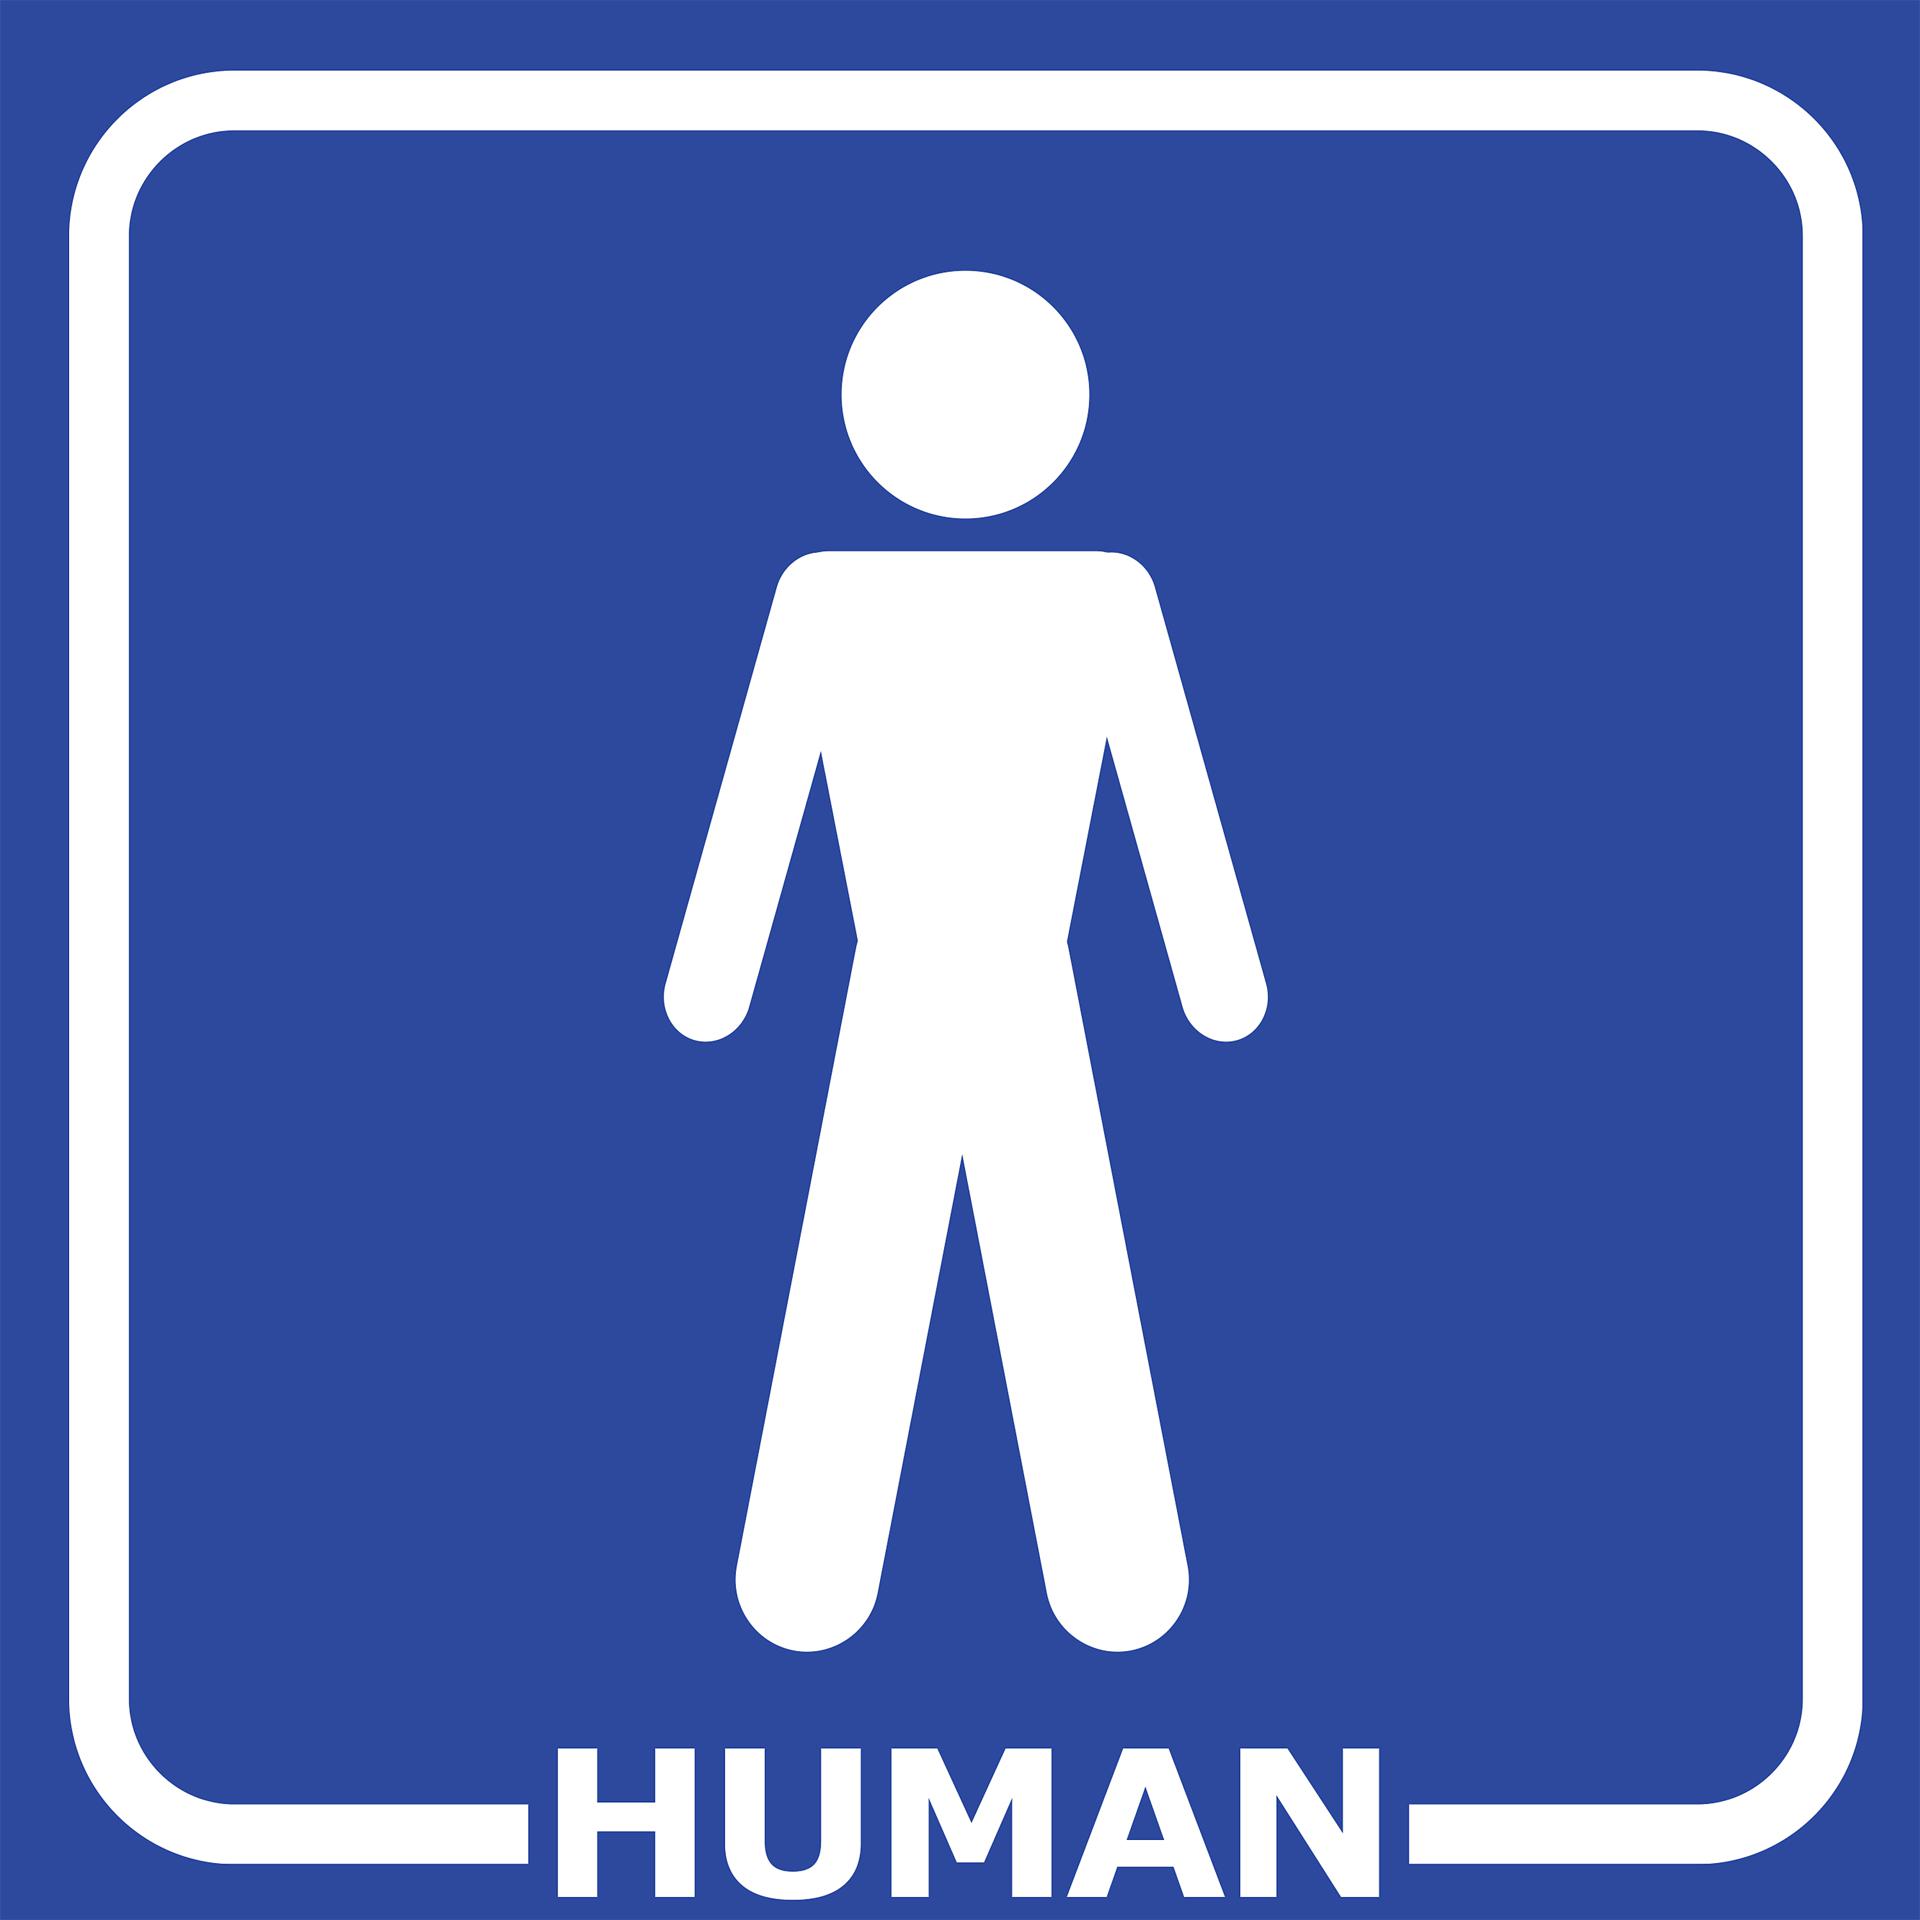 Humanize text. Логотип туалета. Wake up Human. Human. Слушать ХЬЮМАН.